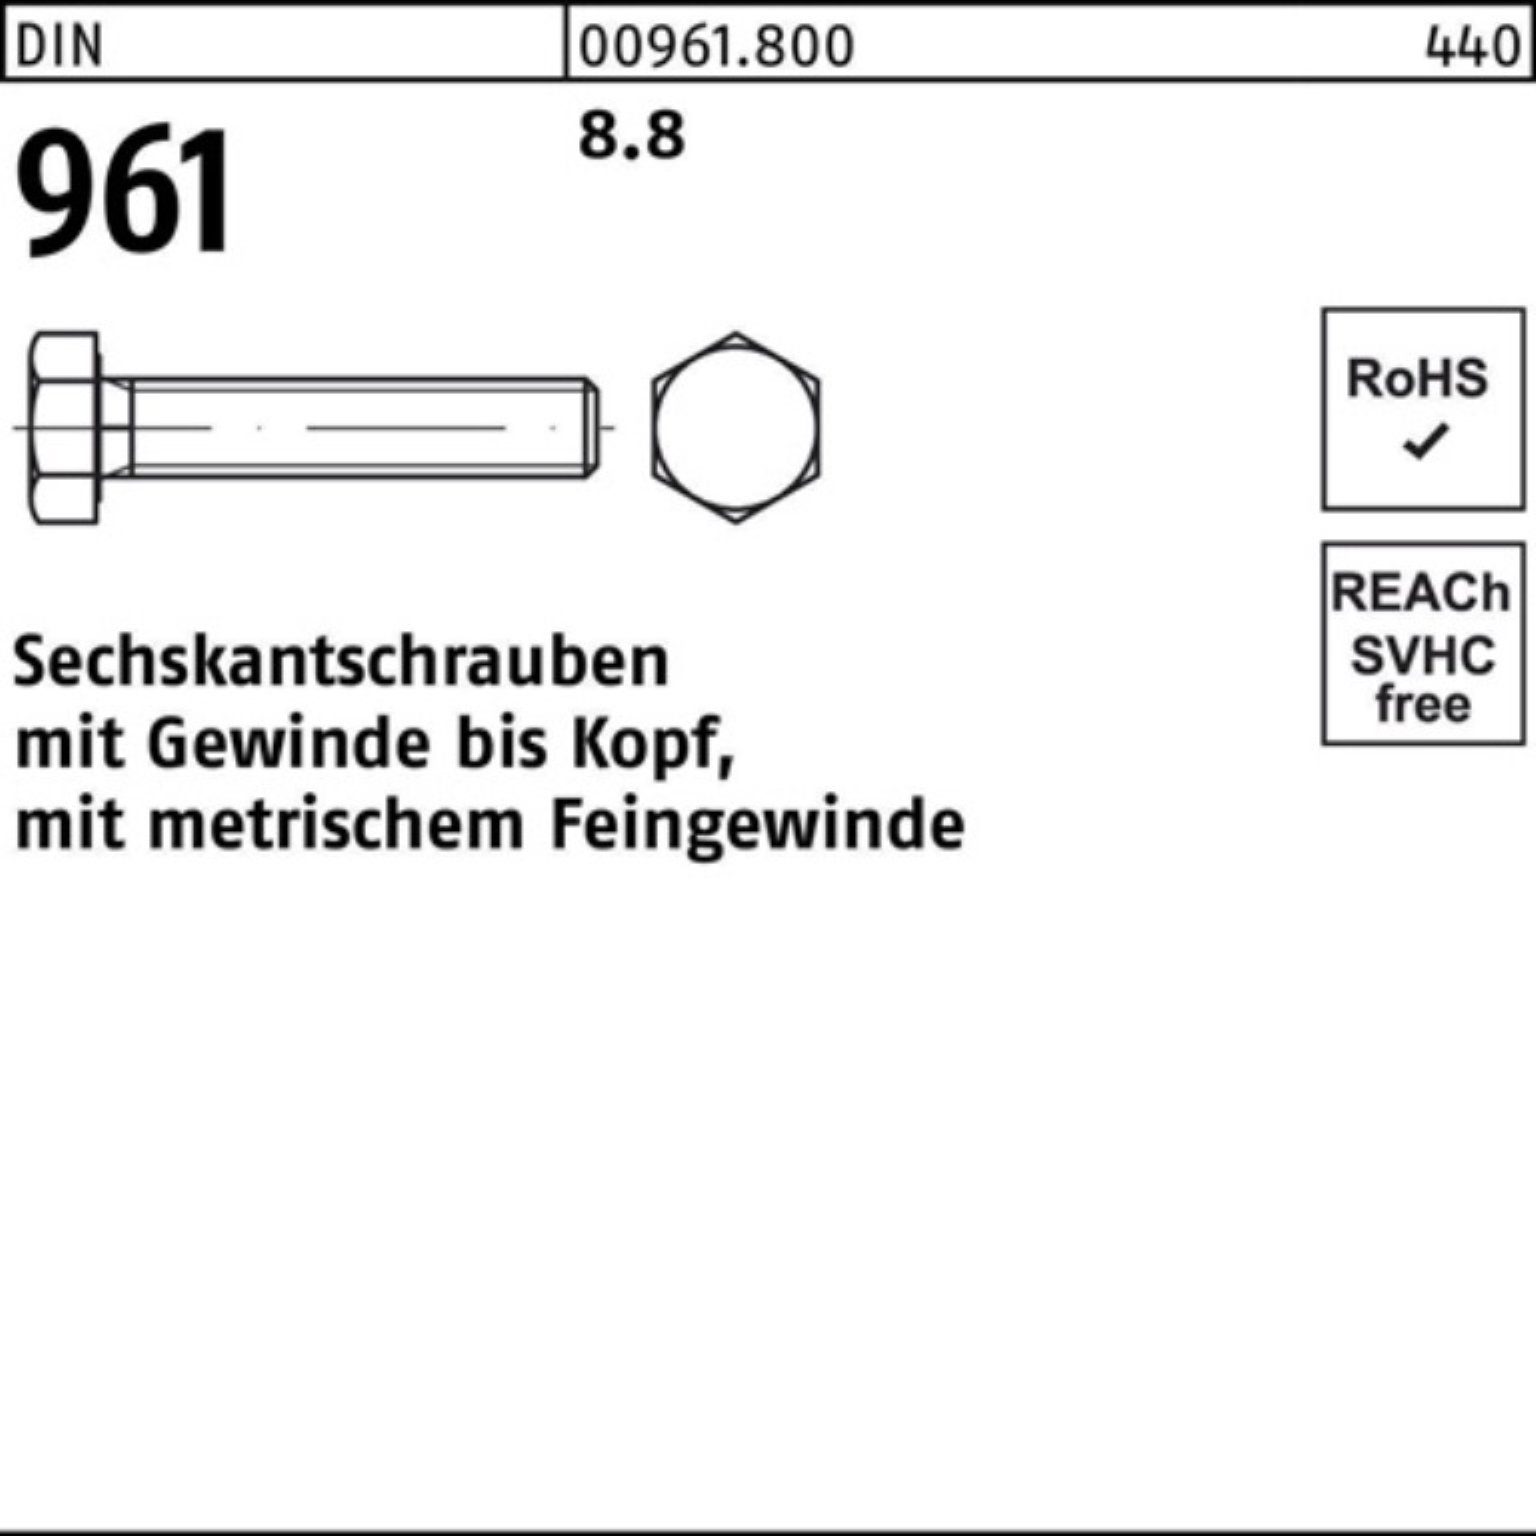 Pack VG Sechskantschraube 200 200er 961 Sechskantschraube 16 8.8 DI Reyher DIN M10x1,25x Stück